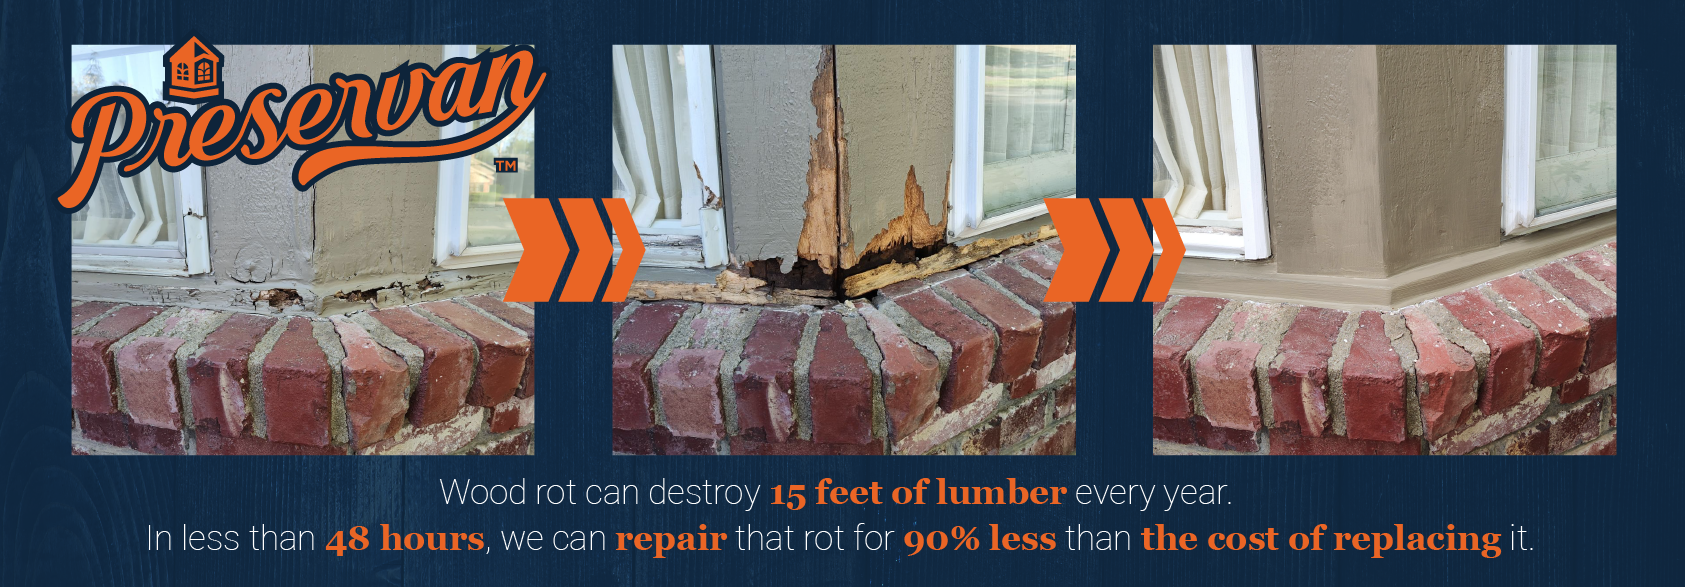 Preservan Wood Rot Repair is the best handyman company to repair wood rot & dry rot around windows & doors in Orlando, FL.